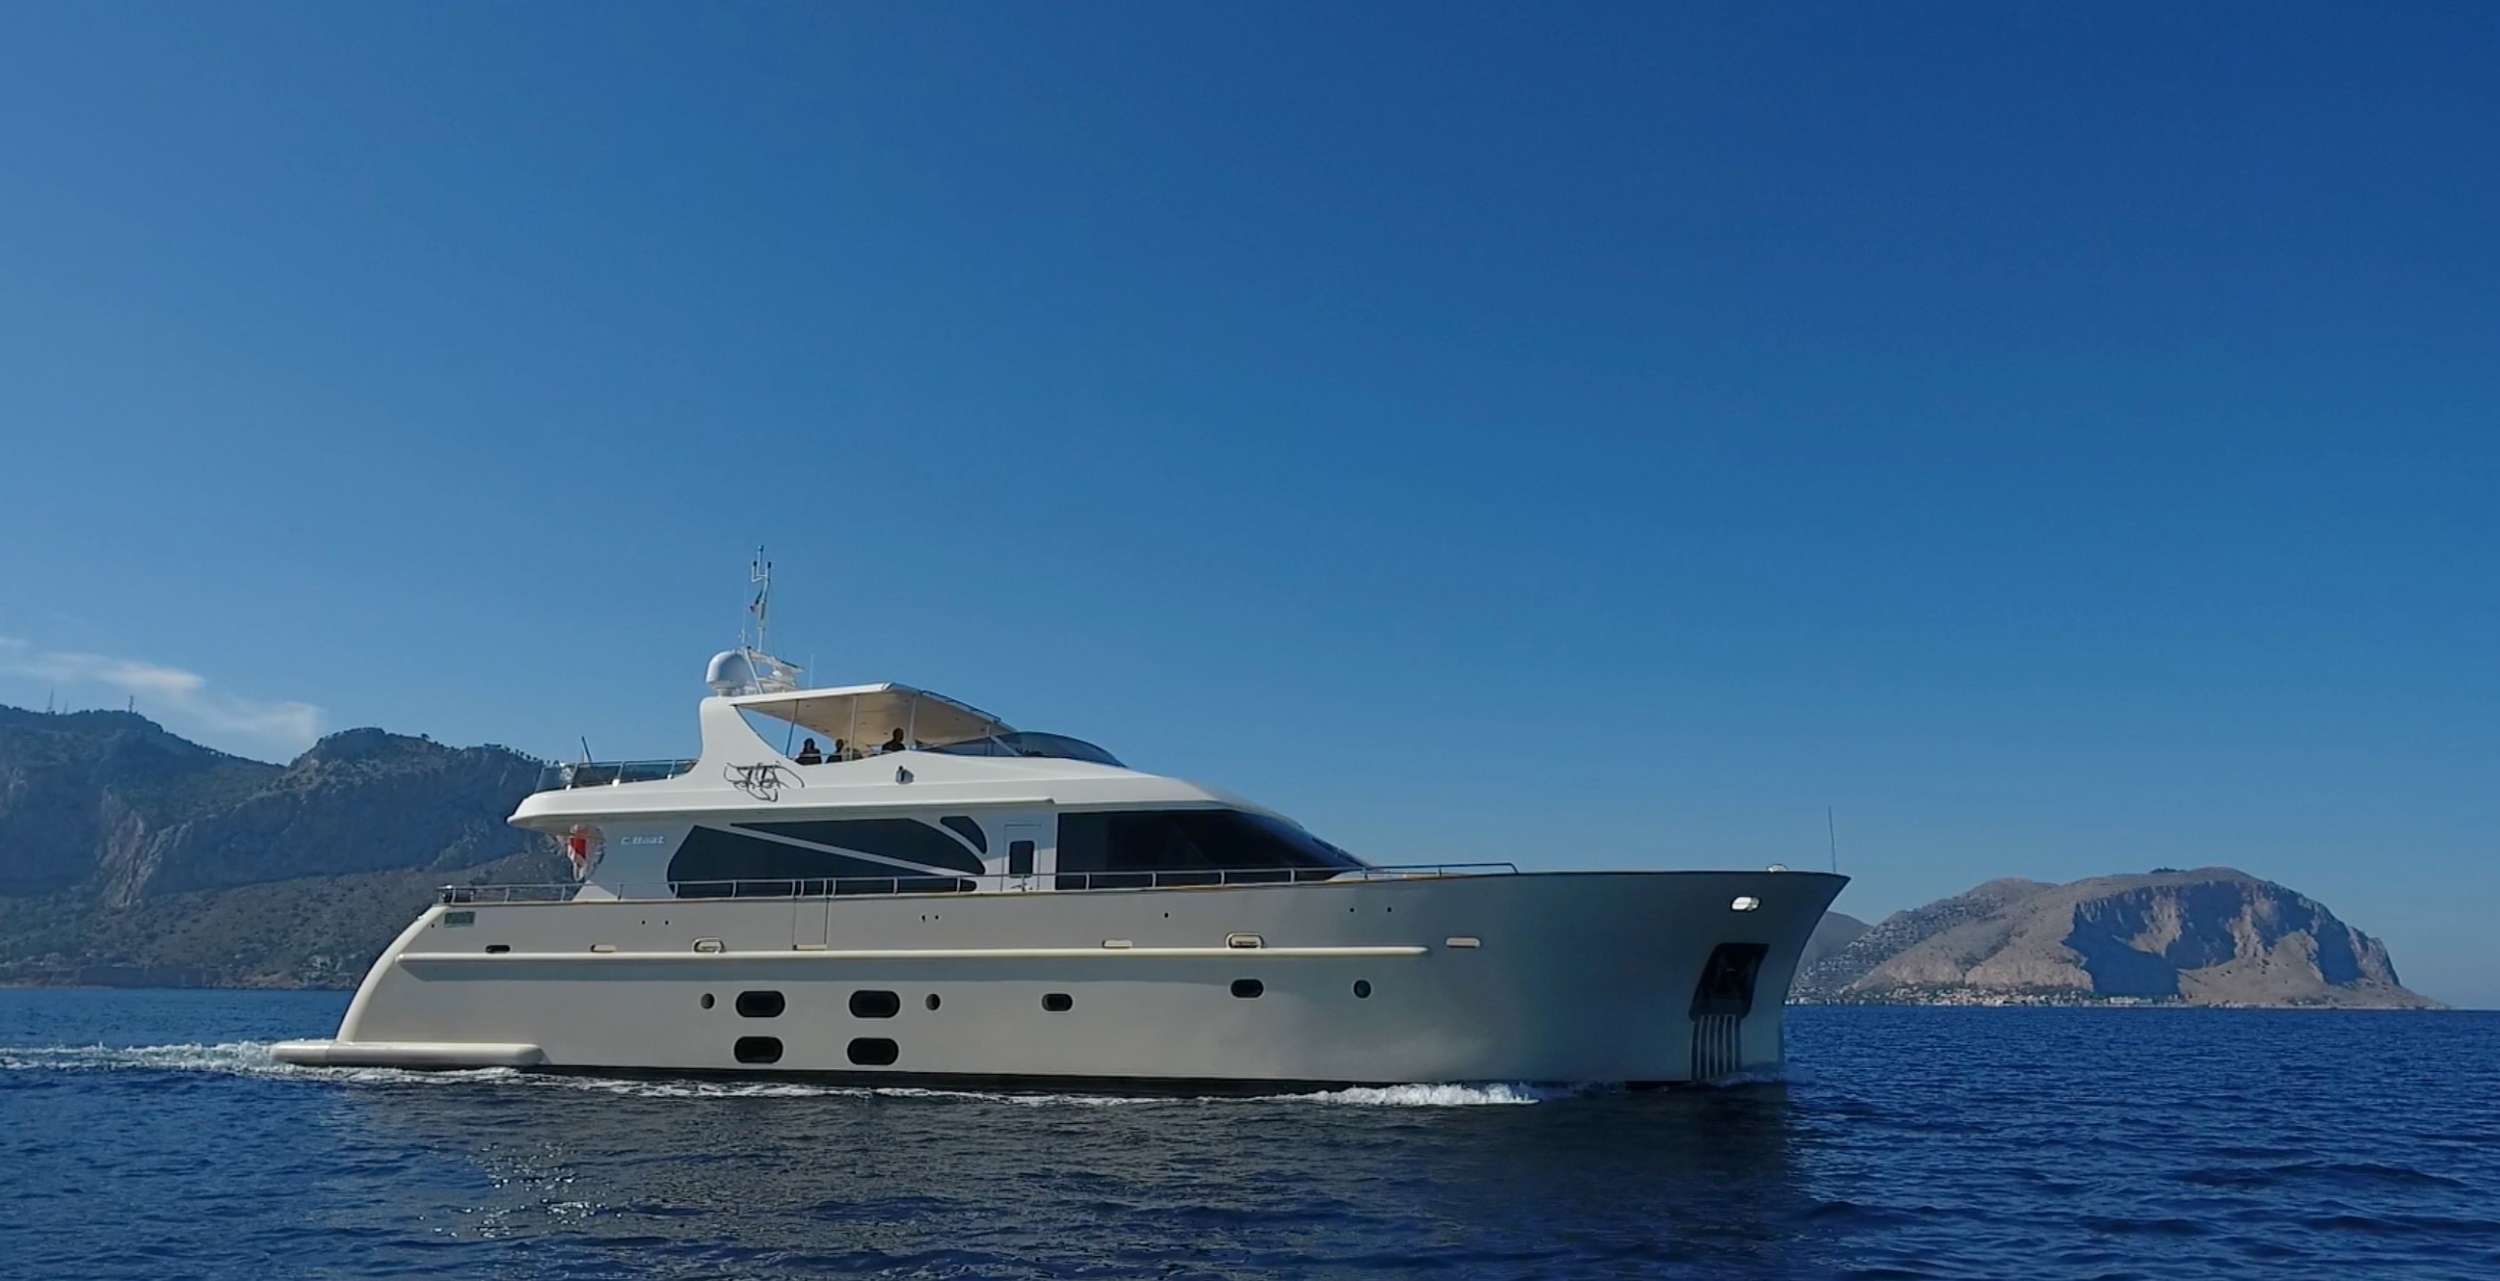 aria c - Yacht Charter Poltu Quatu & Boat hire in Riviera, Cors, Sard, Italy, Spain, Turkey, Croatia, Greece 1